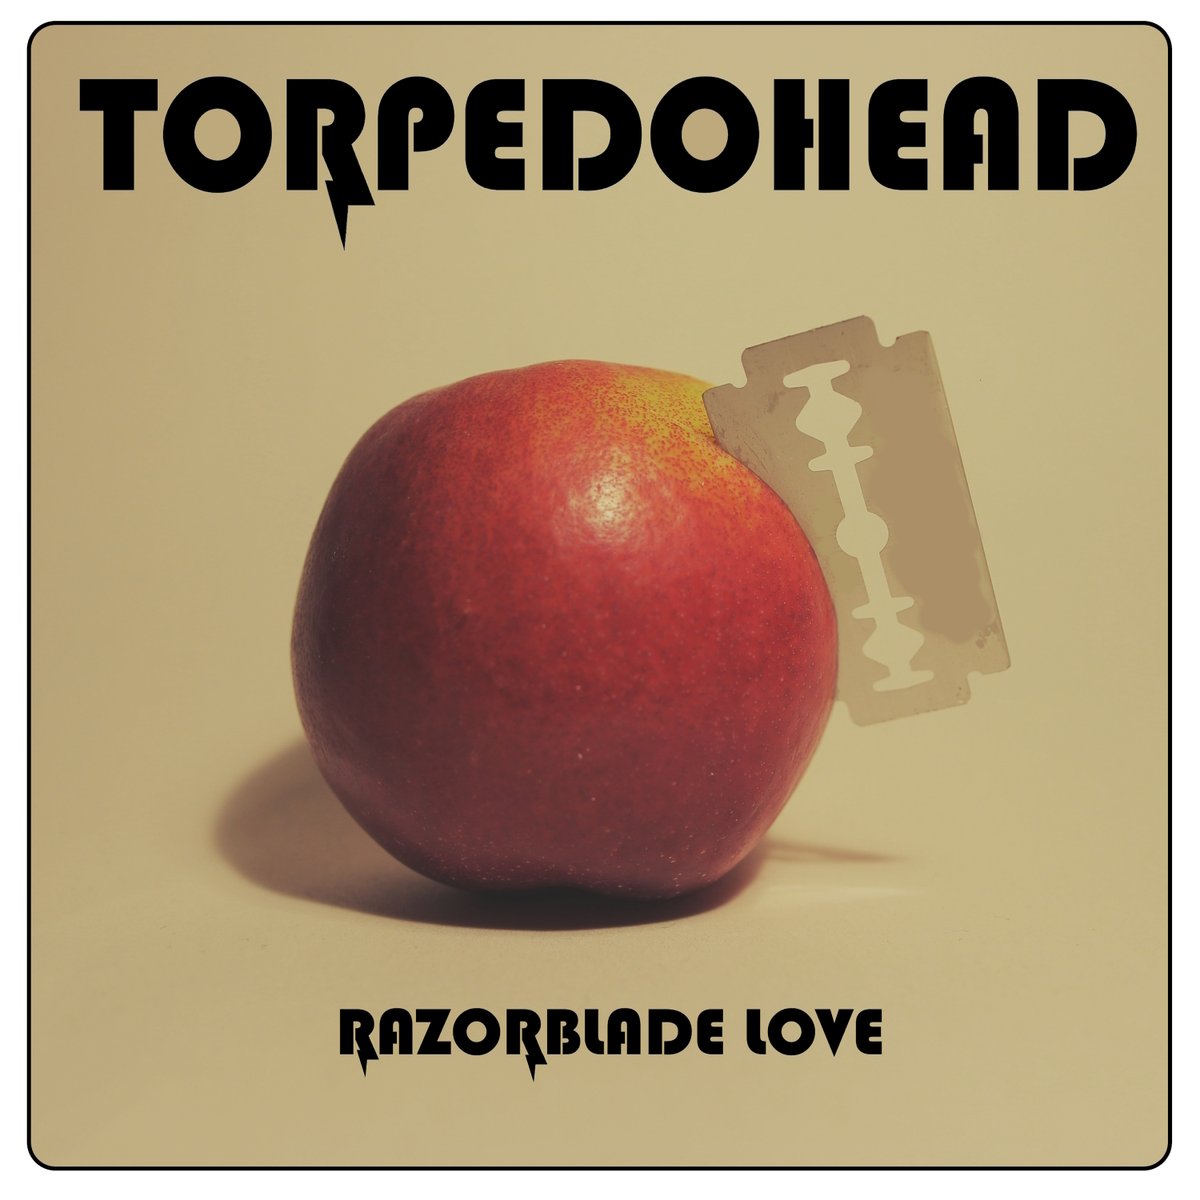 'Razorblade Love' OUT NOW⚡️youtube.com/watch?v=SdLkzy…   ⚡️ #torpedohead #rocknroll #newvideo #newsingle #releaseday #happyreleaseday #fridayrelease #newfriday #believe #bugvalleyrecords #razorbladelove